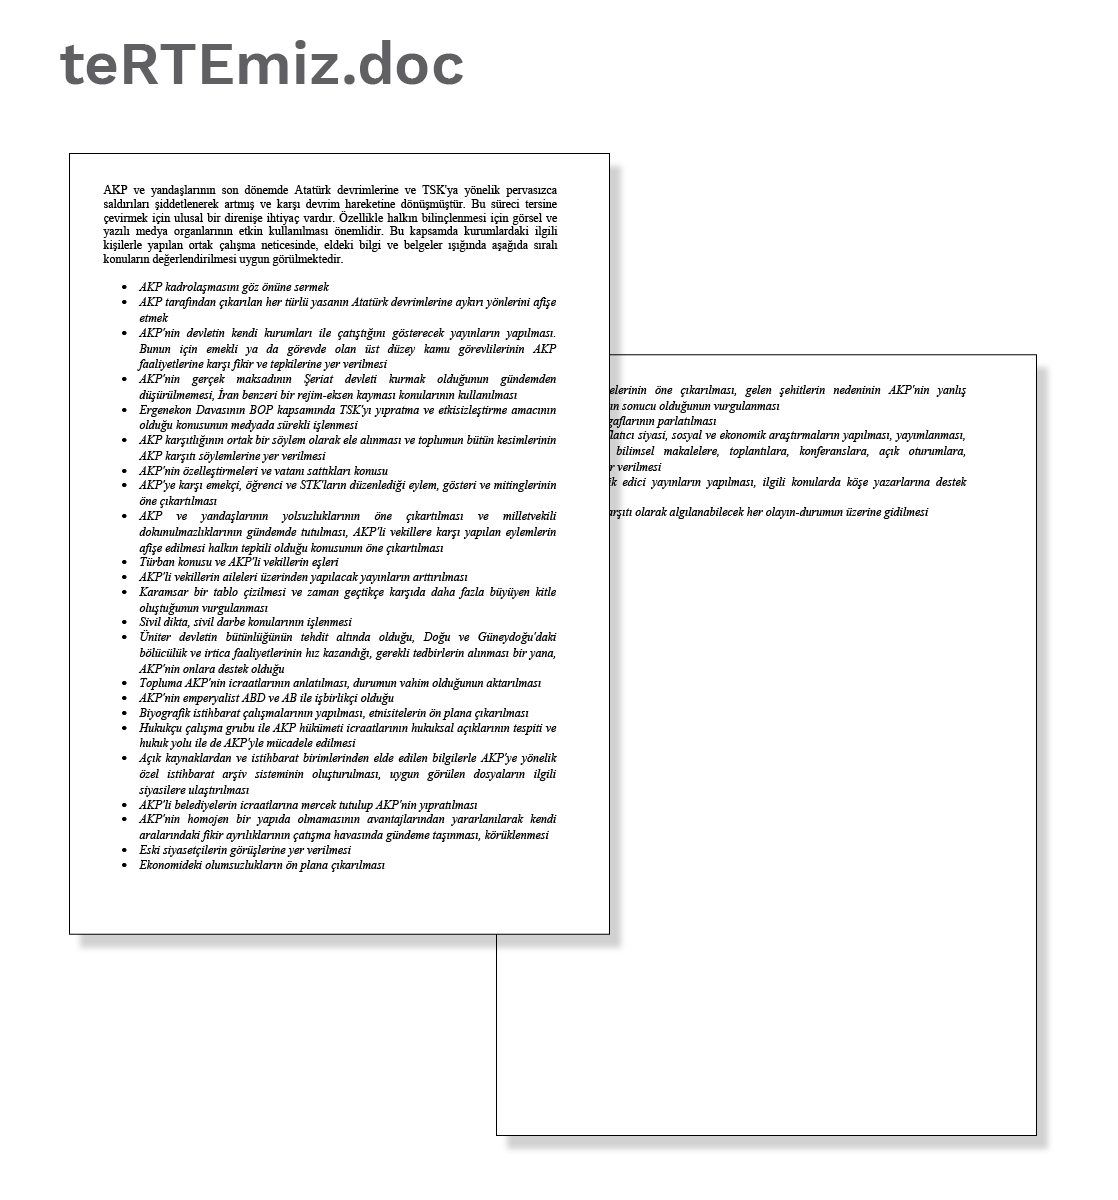 Document 8: teRTEmiz.doc